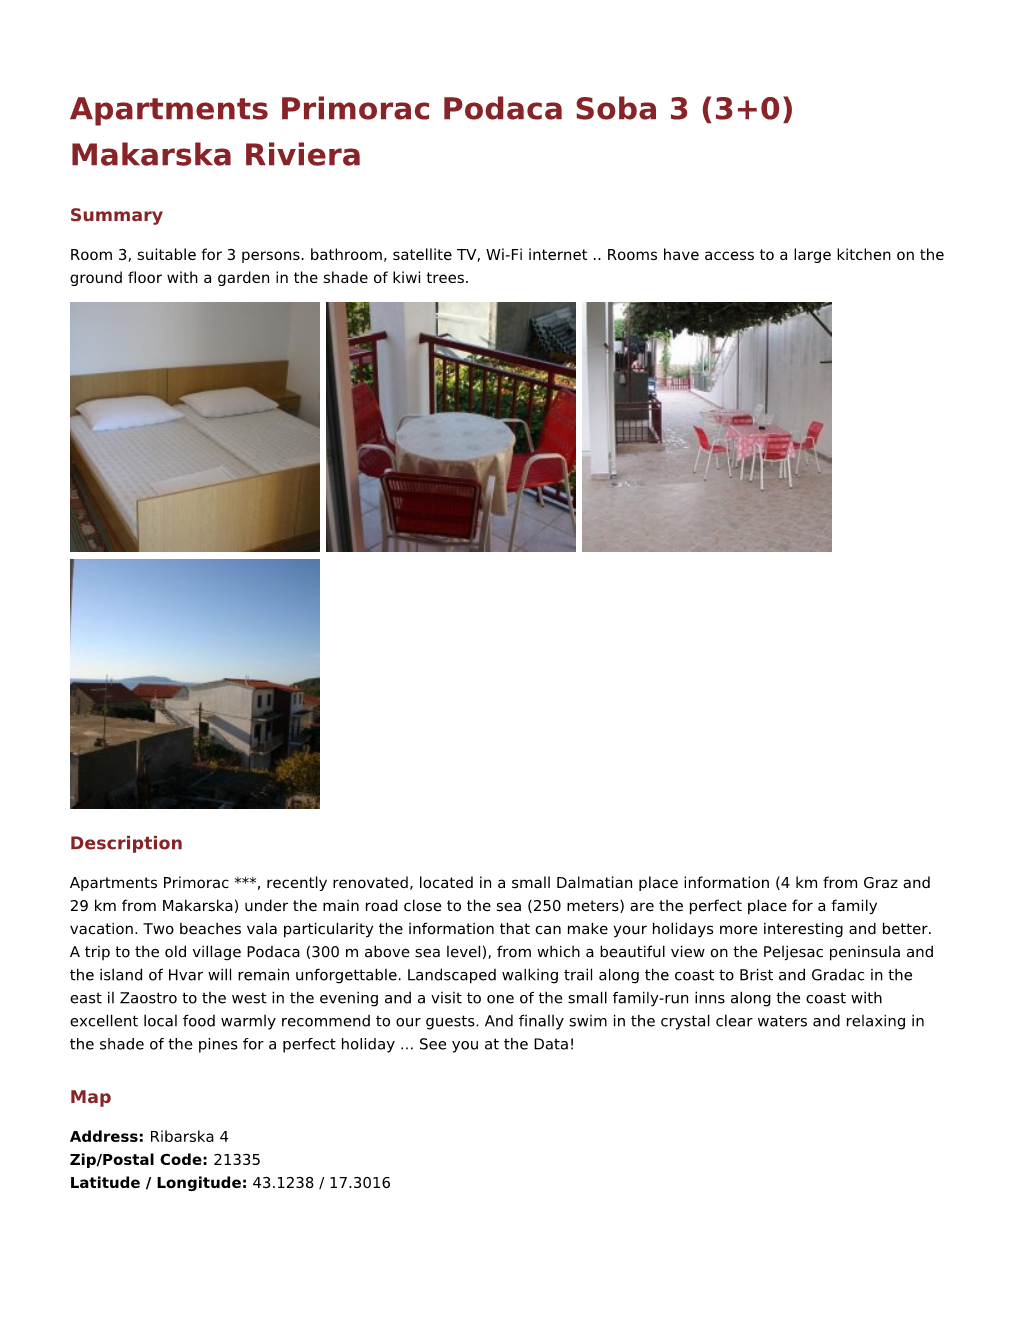 Apartments Primorac Podaca Soba 3 (3+0) Makarska Riviera